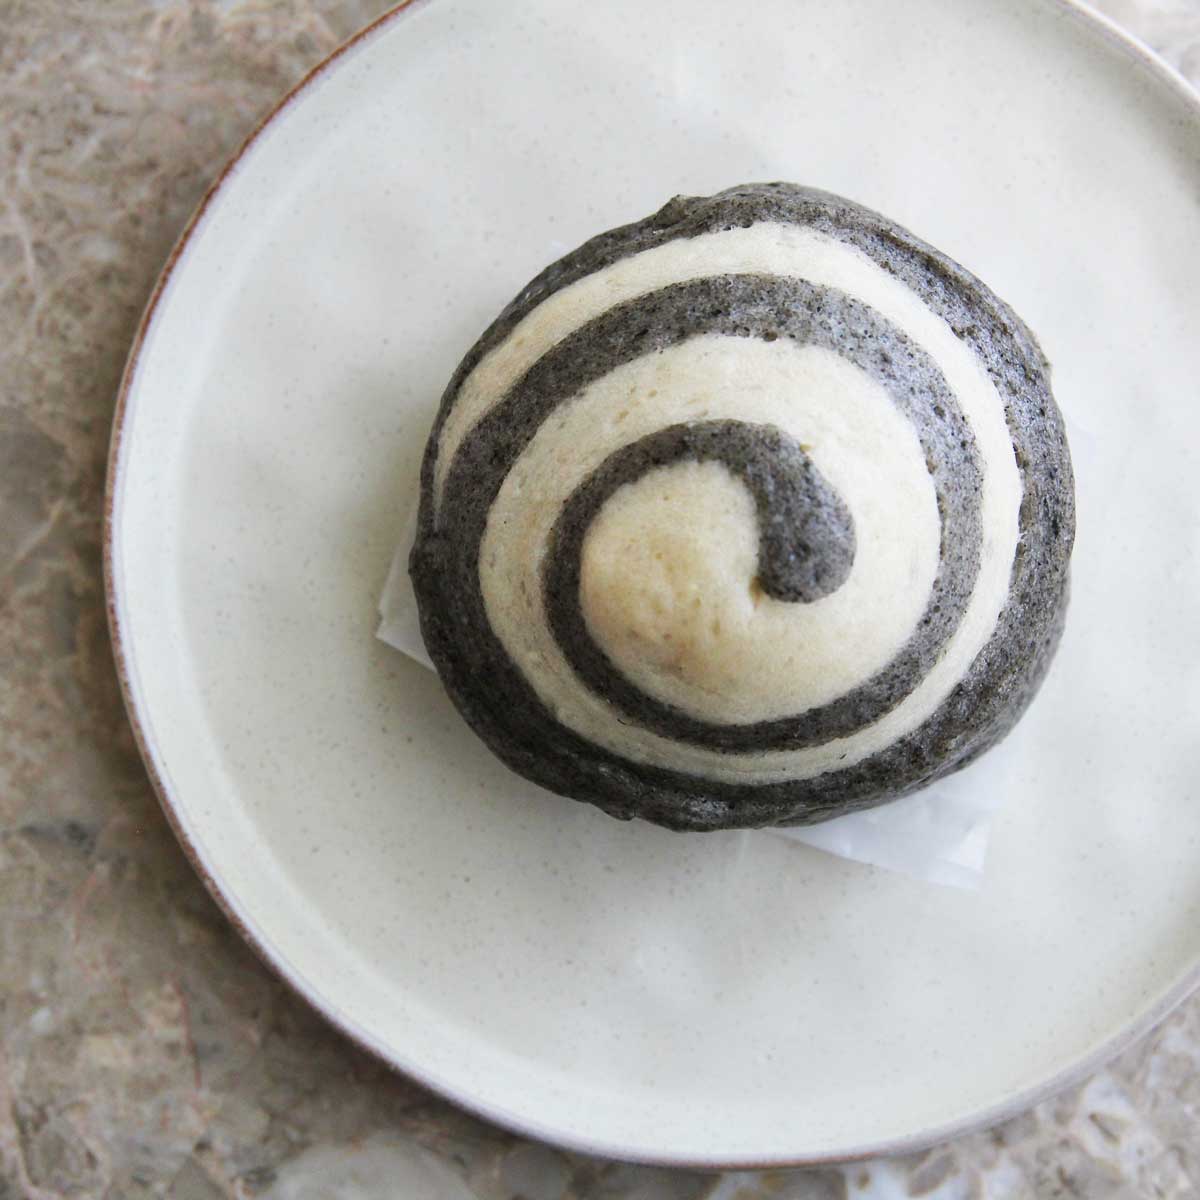 Homemade Black Sesame & Almond Milk Spiral Mantou (Vegan Steamed Buns Recipe) - Corn Mochi Cake